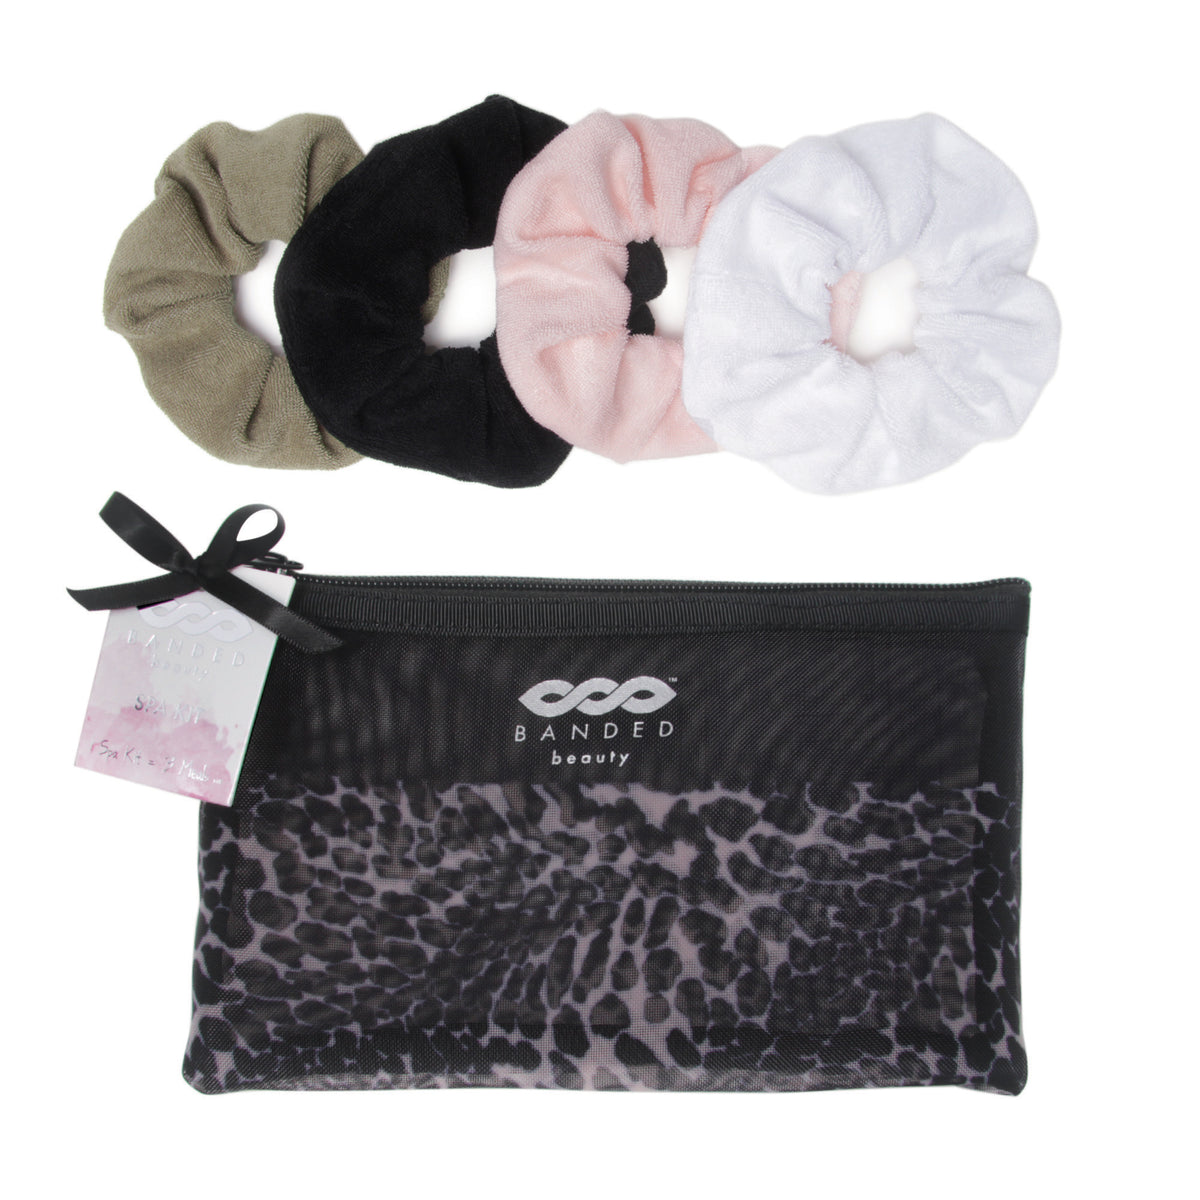 BANDED Women’s Premium Hair Accessories + Gift Sets - Leopard Noir - Scrunchie Spa Set